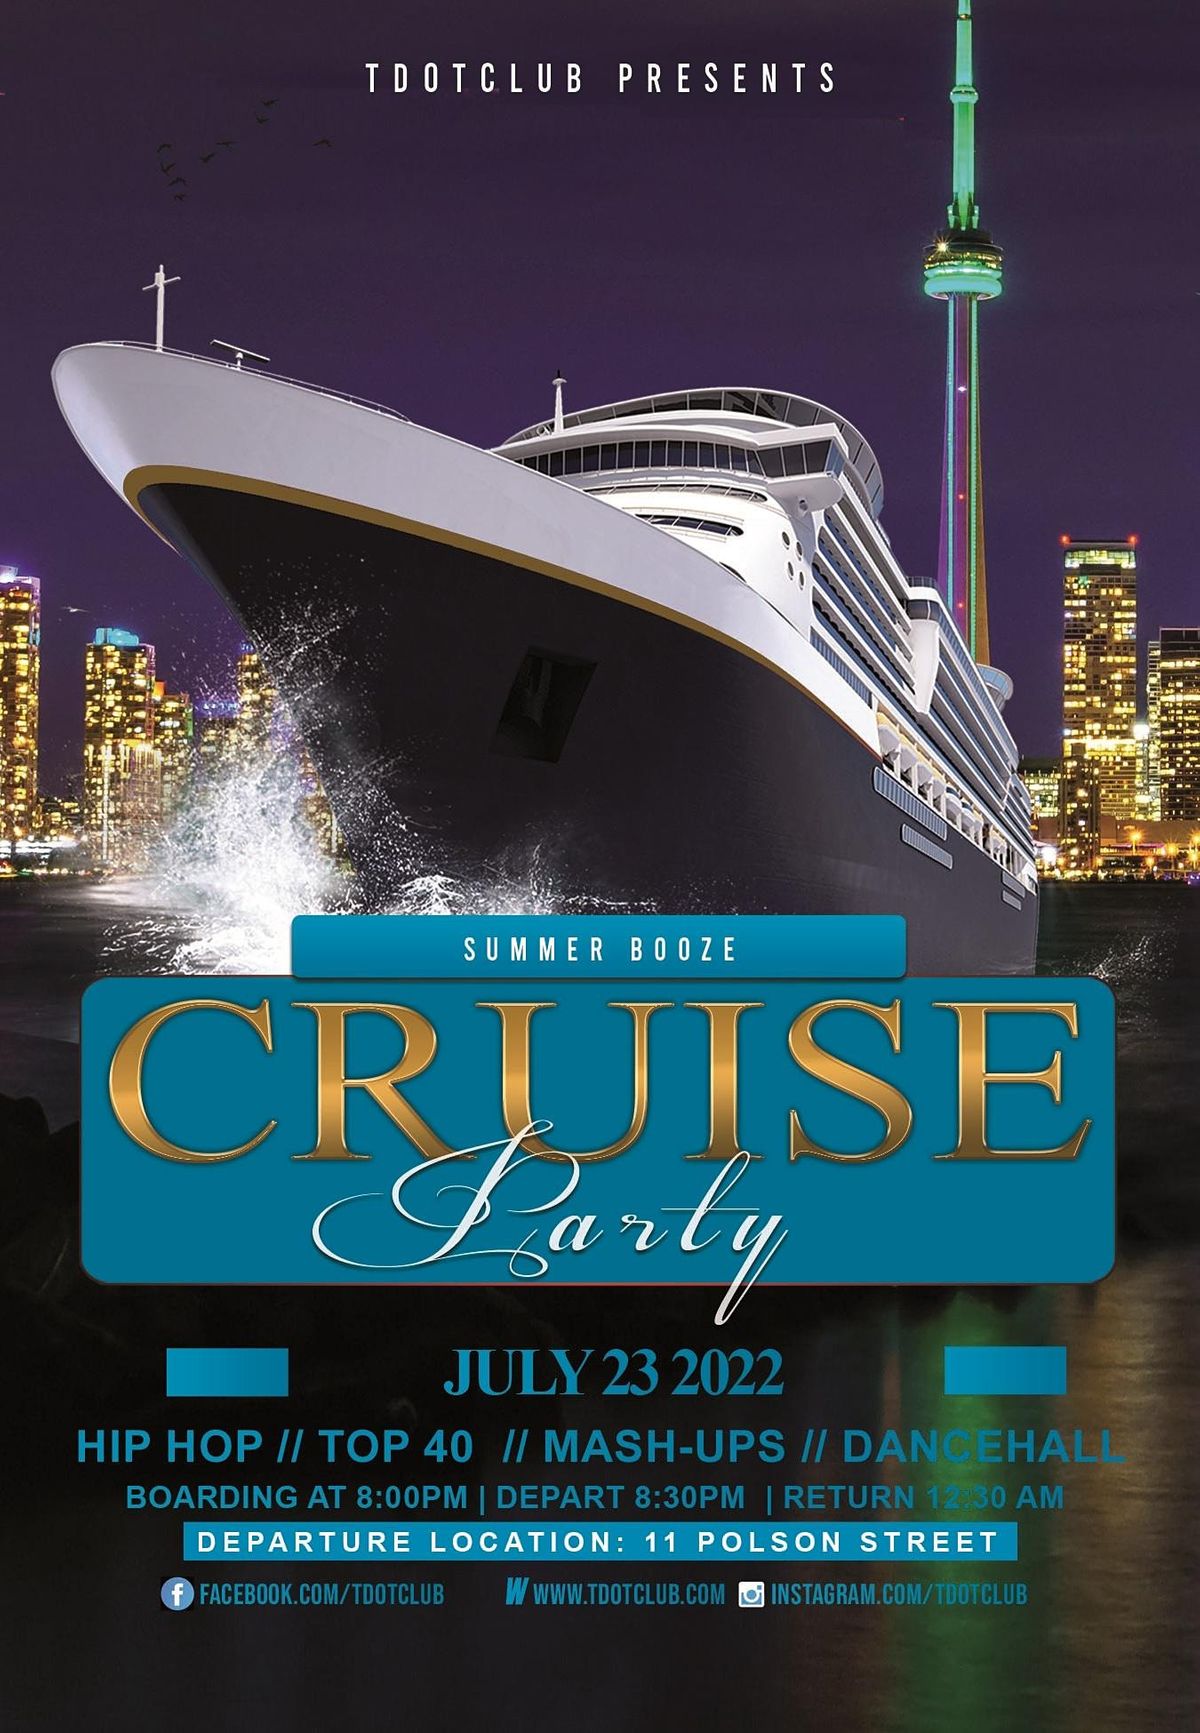 Toronto Summer booze cruise Saturday July 23rd